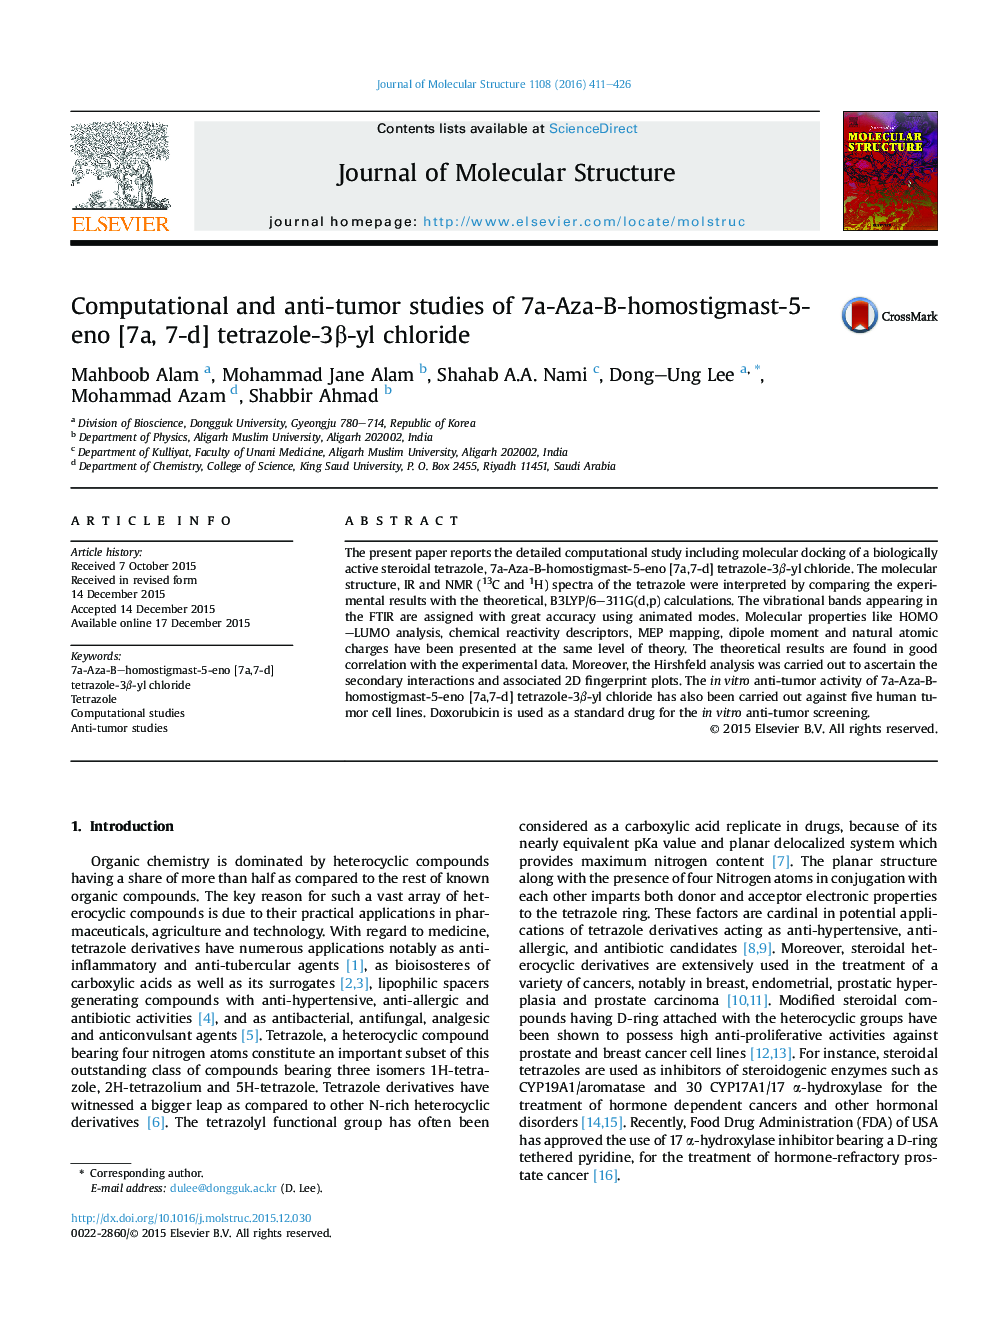 Computational and anti-tumor studies of 7a-Aza-B-homostigmast-5-eno [7a, 7-d] tetrazole-3Î²-yl chloride